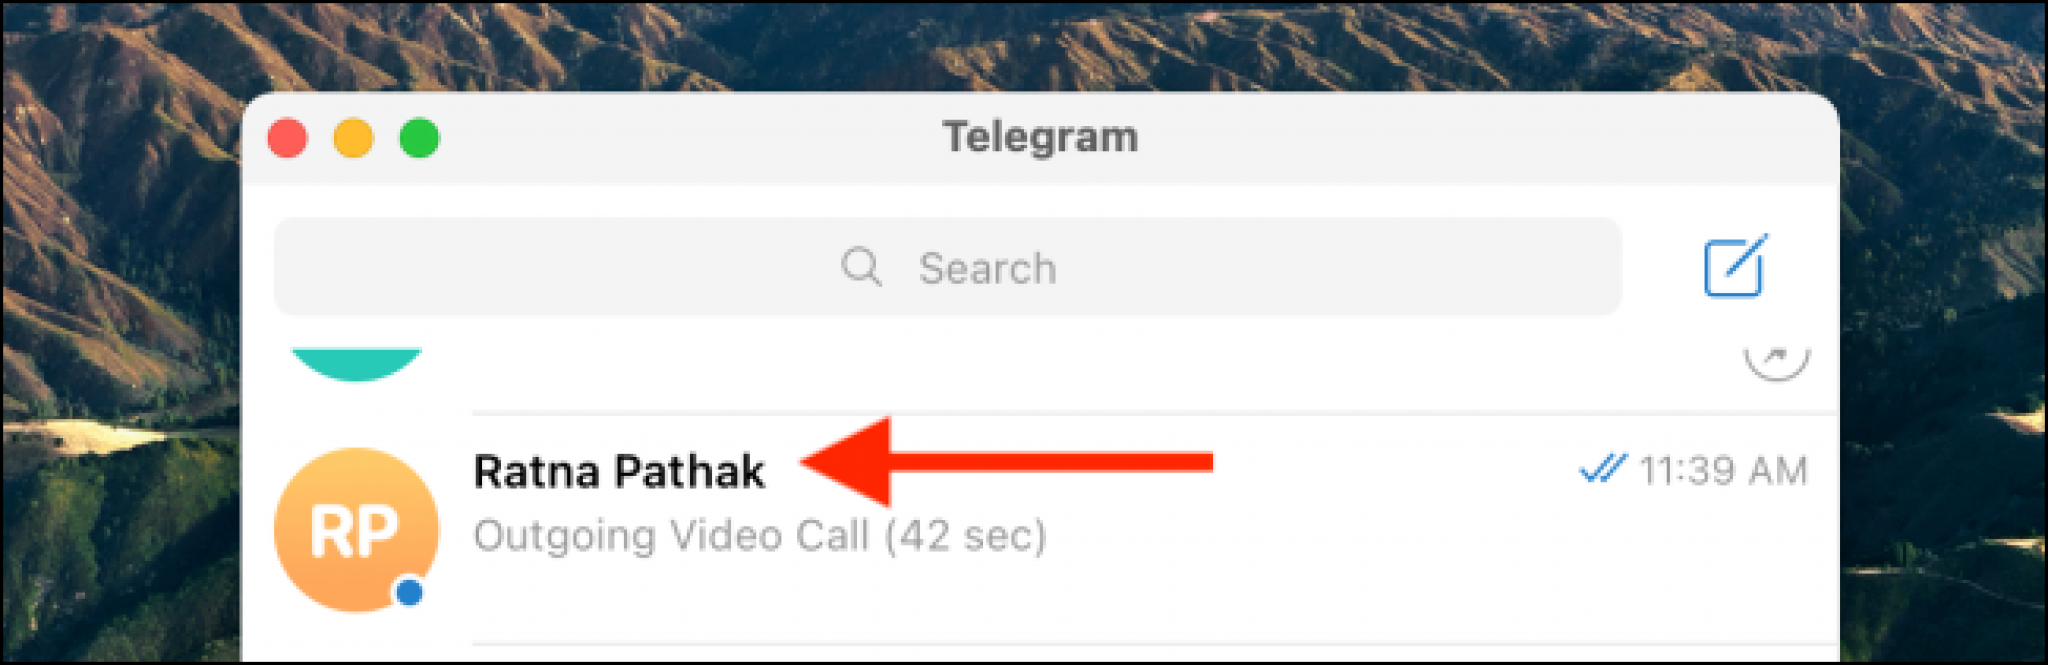 Как включить видеозвонок в телеграмме на телефоне андроид фото 103